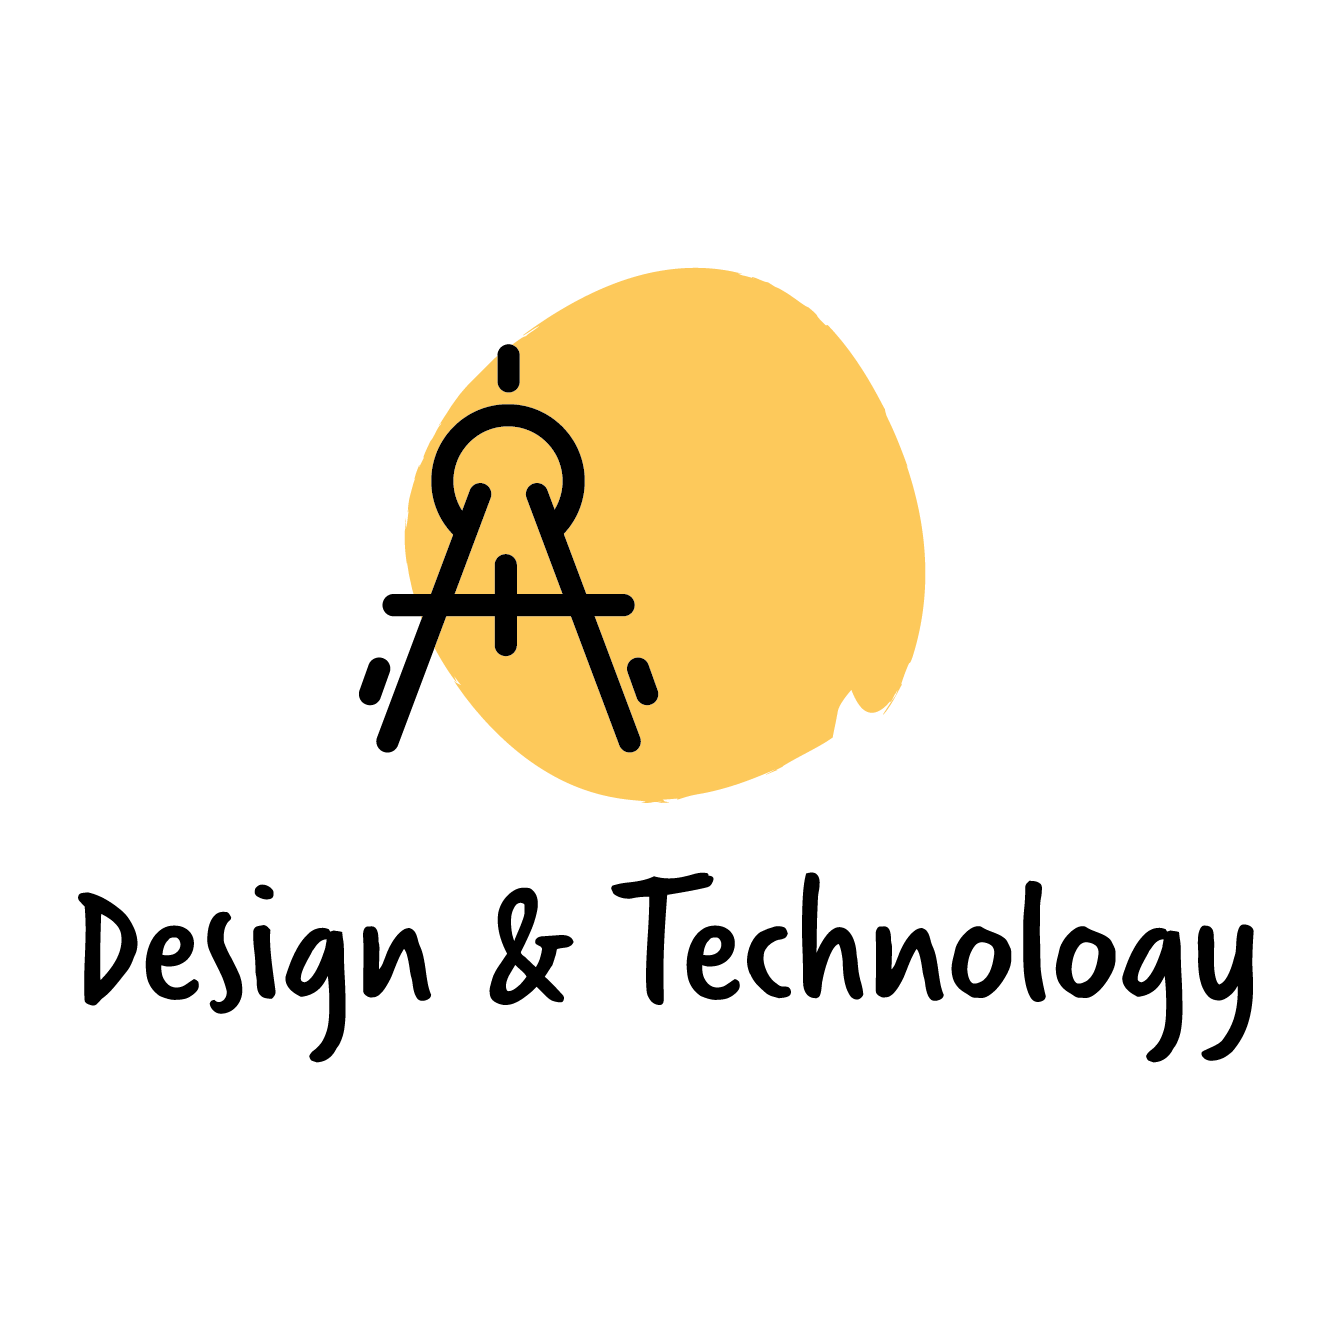 Design & Technology_large.png